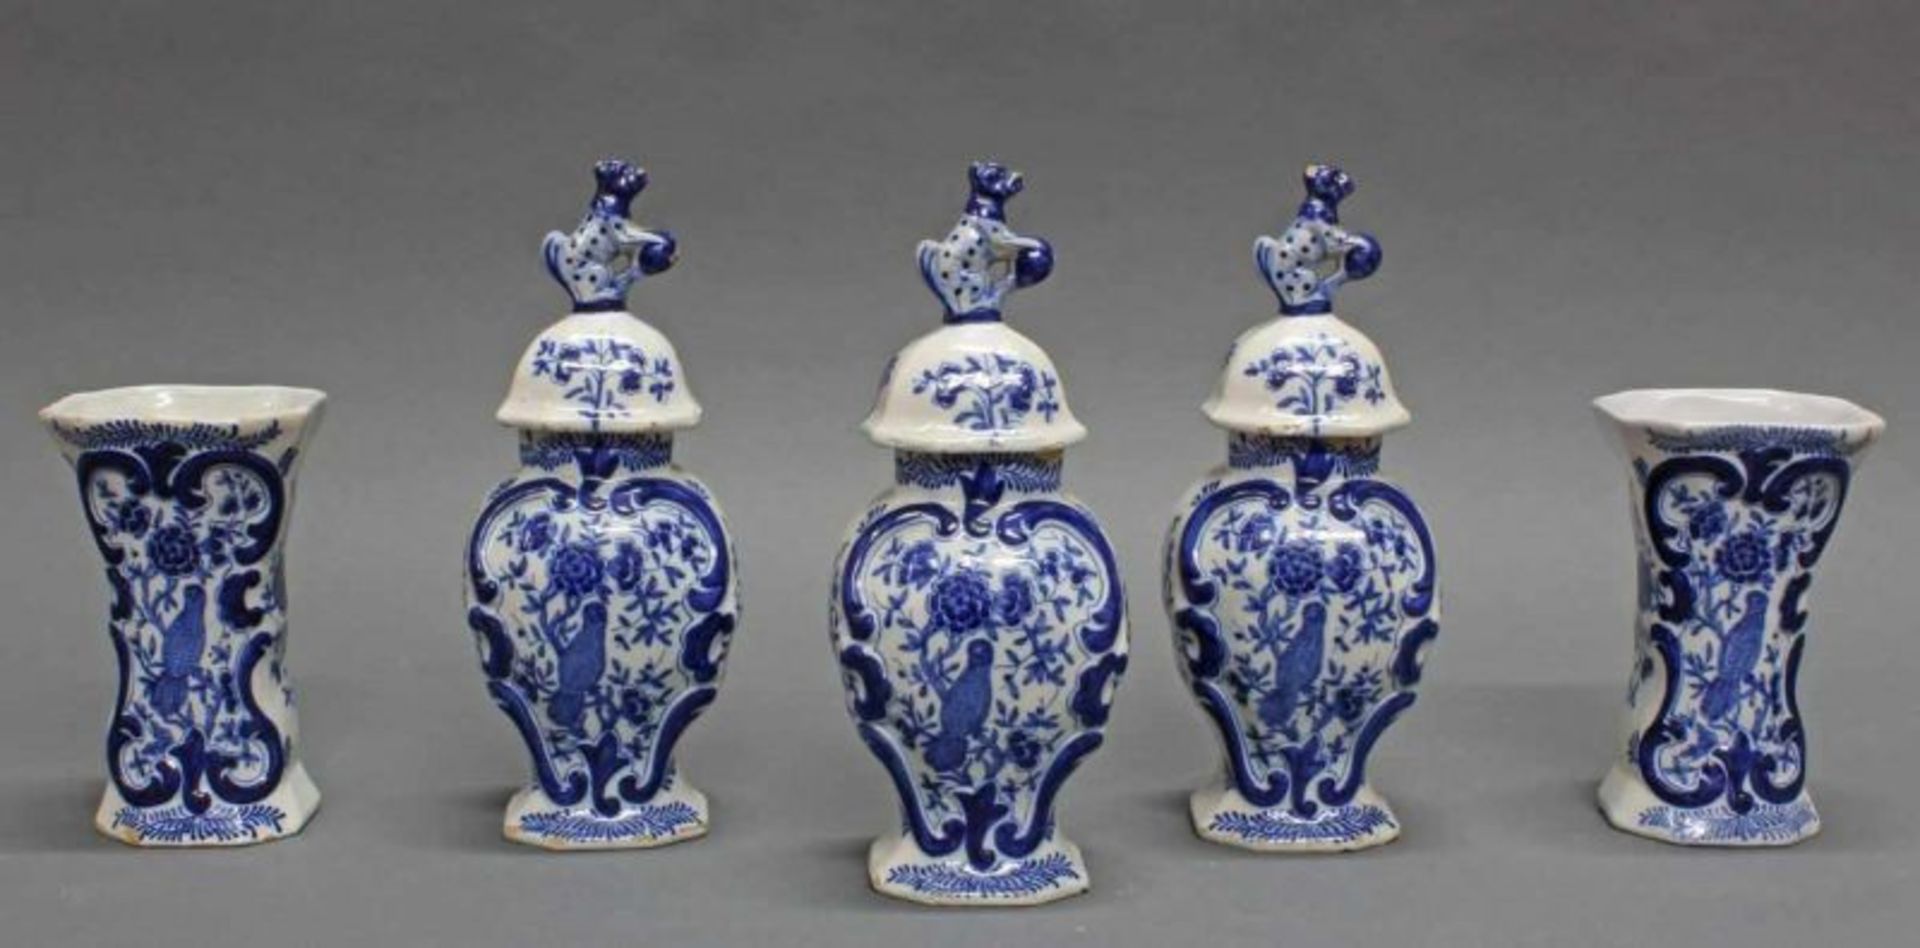 Vasengarnitur, 5 Teile, Fayence, Delft, De Porceleyne Schotel, 18. Jh., blaue Marke VDuijn, floraler